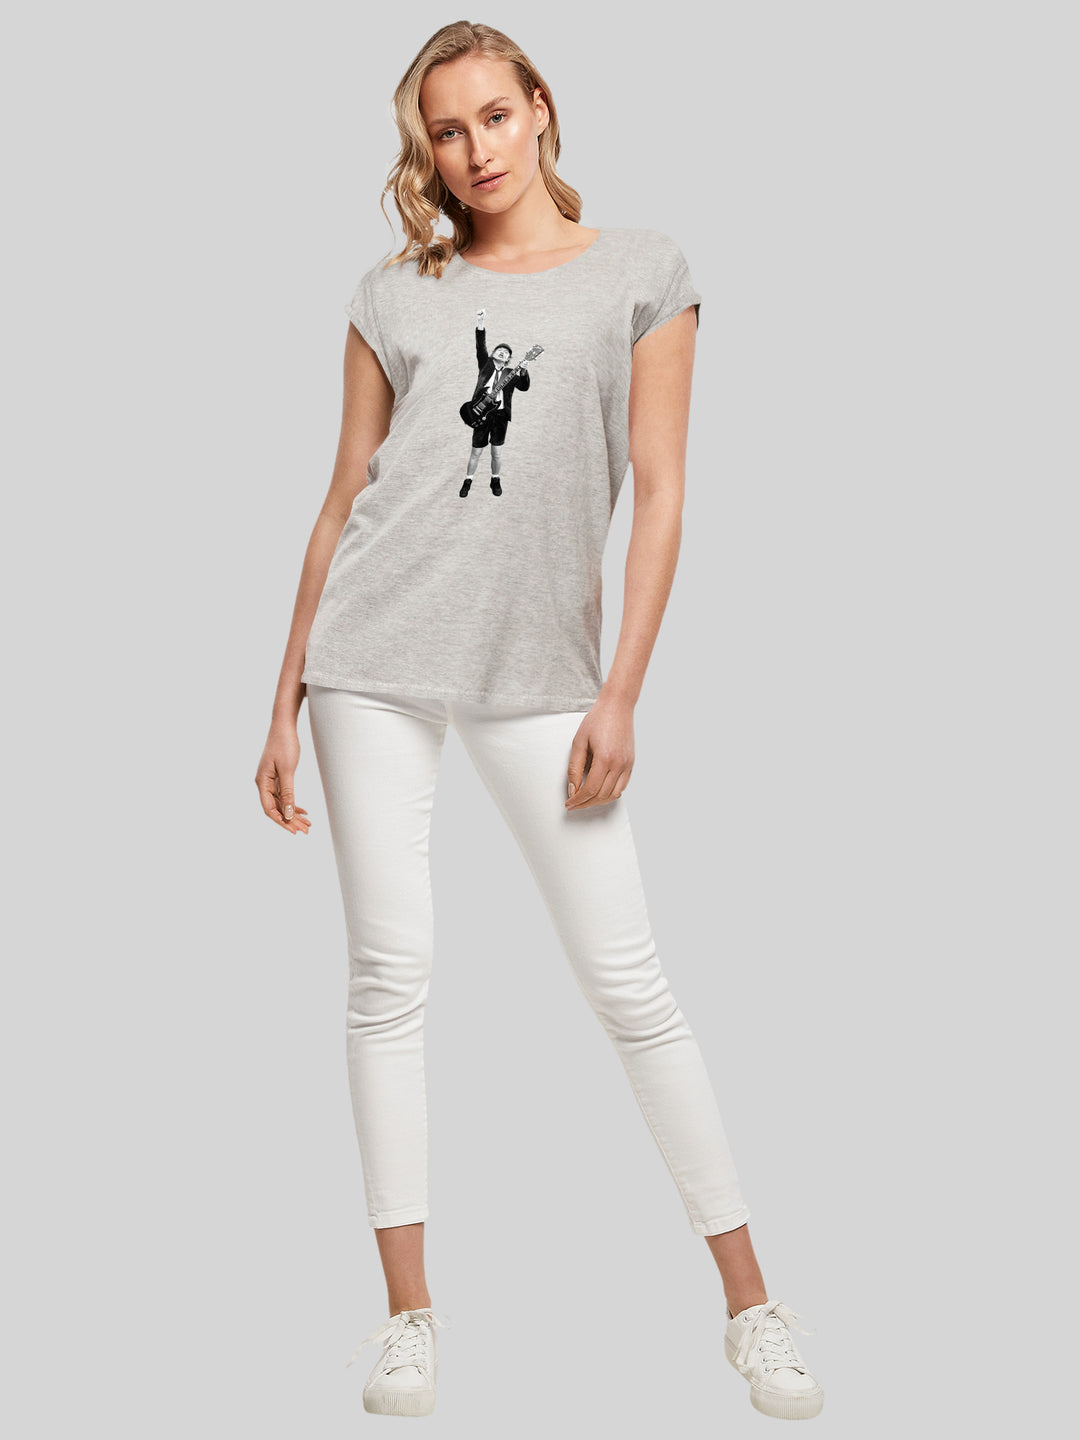 ACDC T-Shirt | Angus Young Cut Out | Premium Kurzarm Damen T Shirt